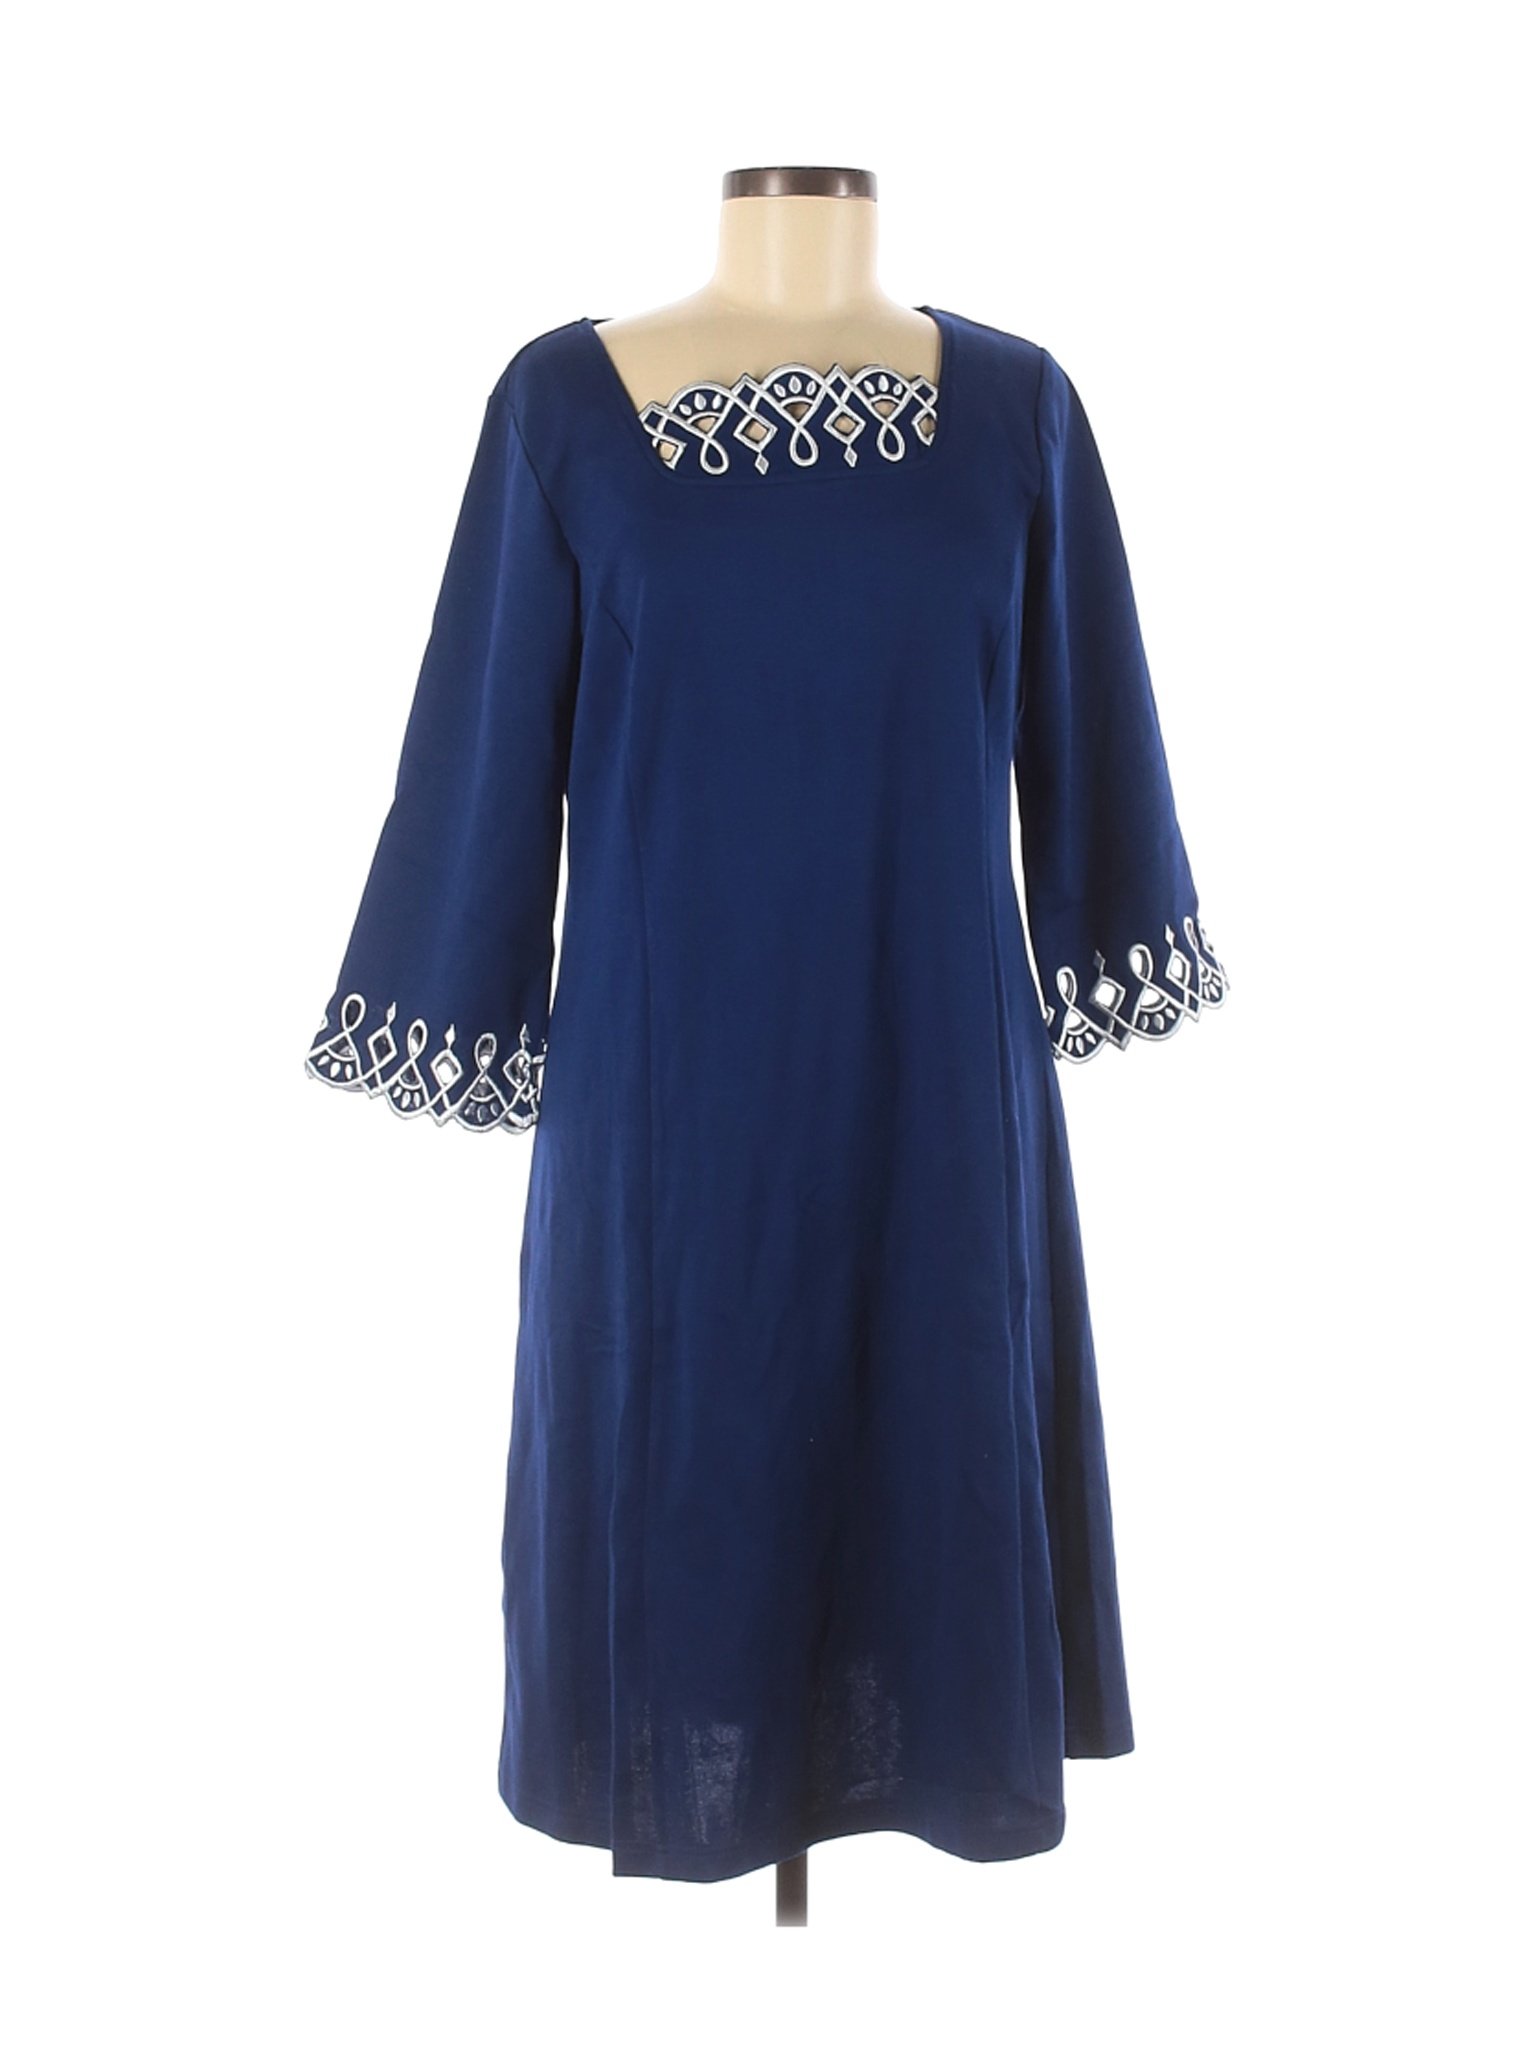 NWT Bob Mackie Women Blue Casual Dress M | eBay